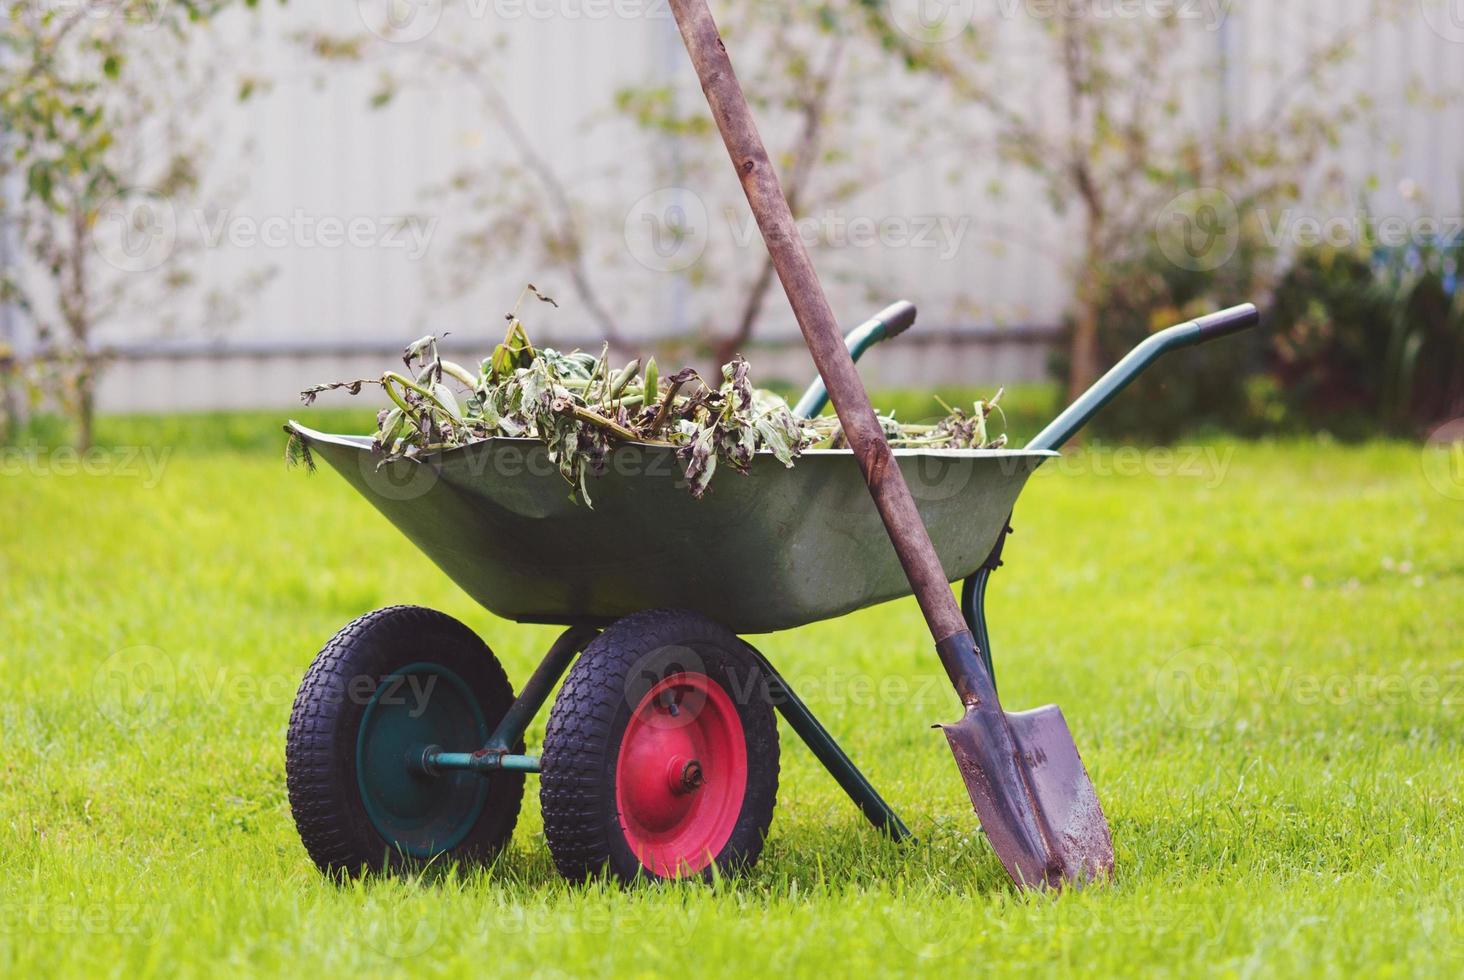 Wheelbarrow in the backyard, green lawn, shovel, uprooted weeds, garden work photo